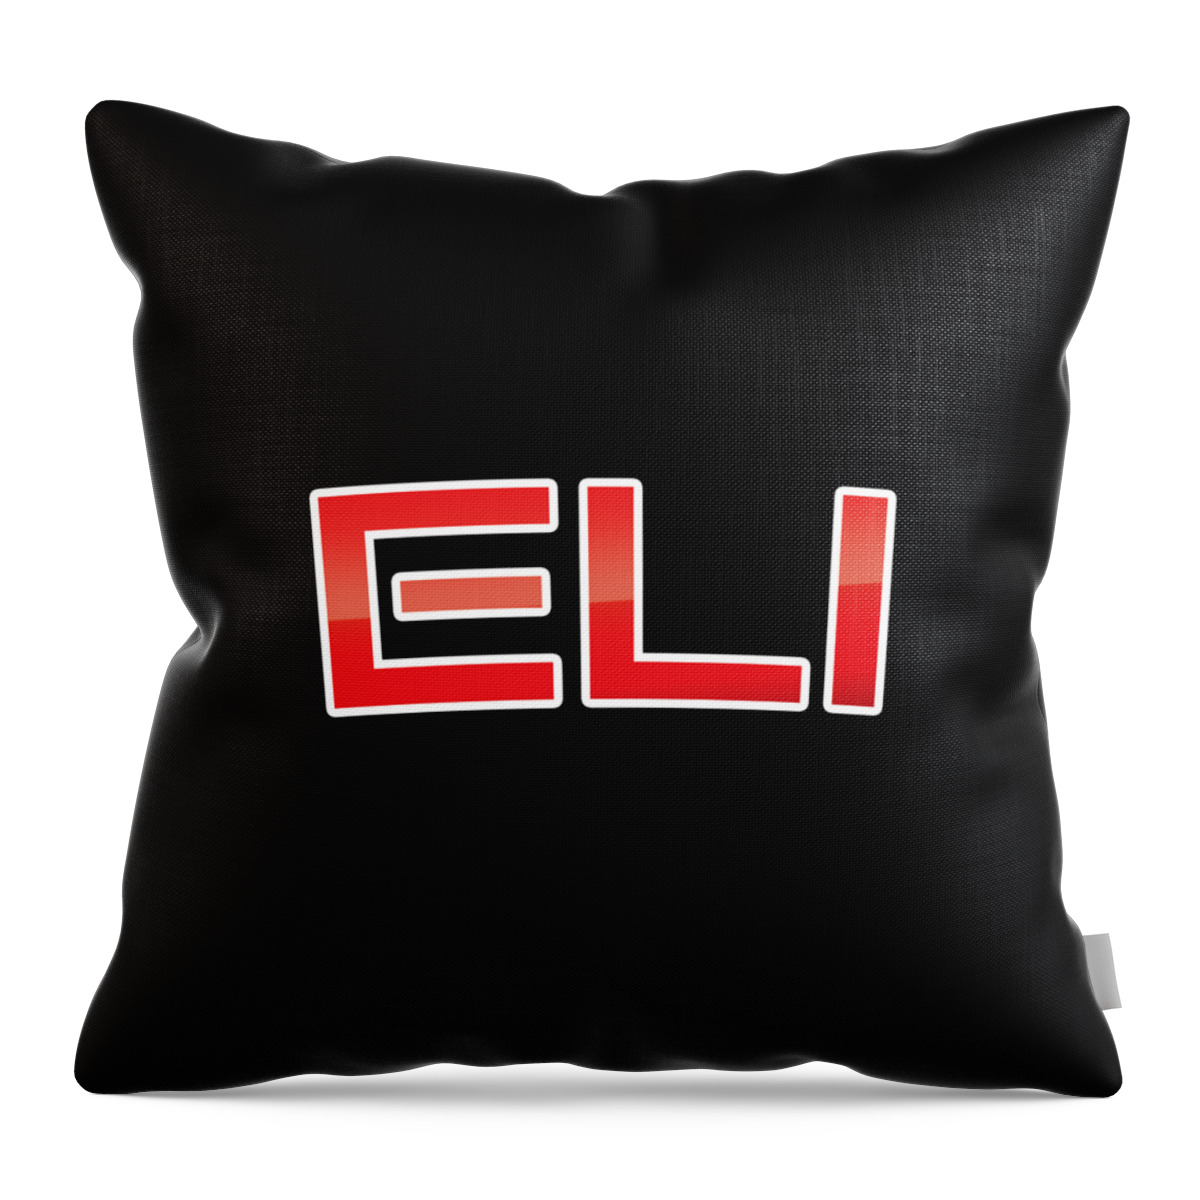 Eli Throw Pillow featuring the digital art Eli by TintoDesigns